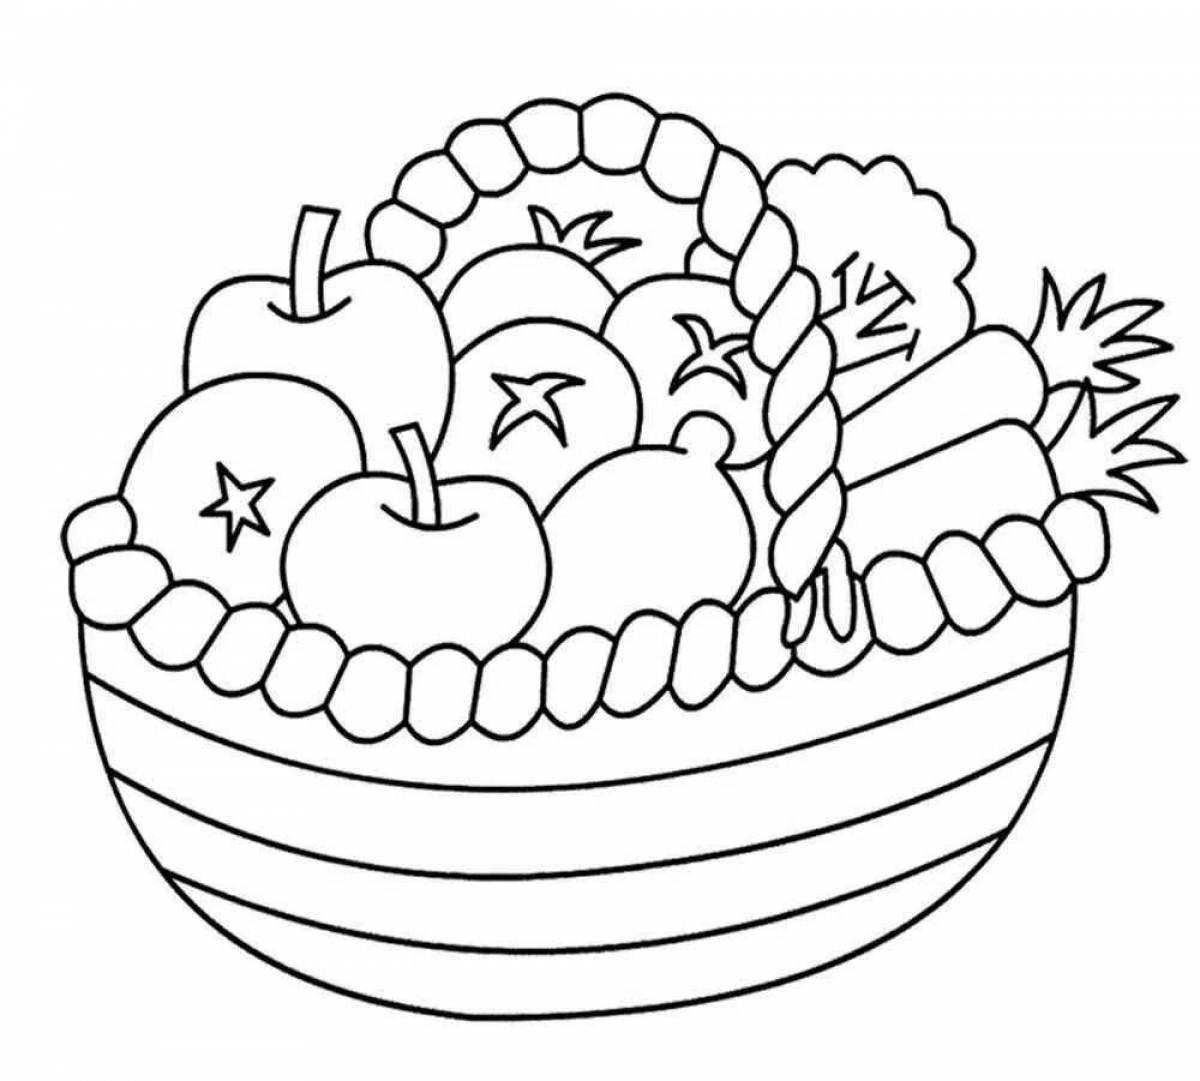 Color bright food basket coloring book